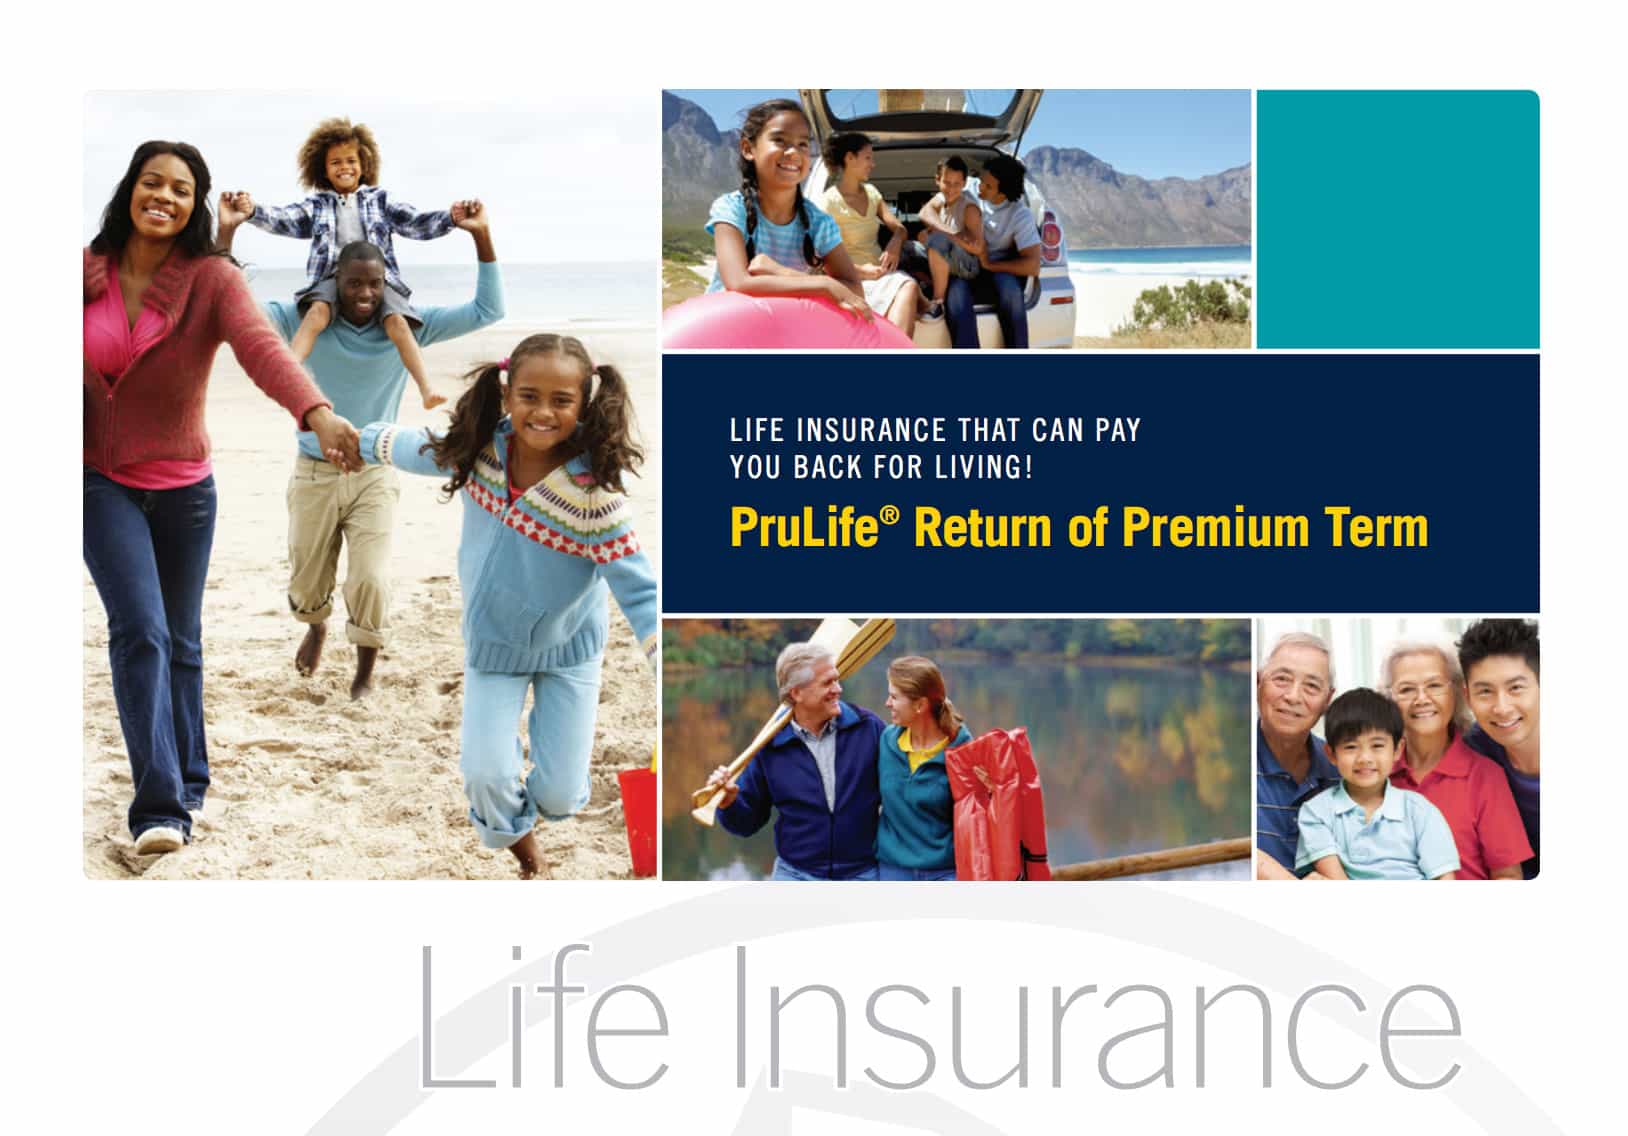 Prudential Life Insurance Return of Premium